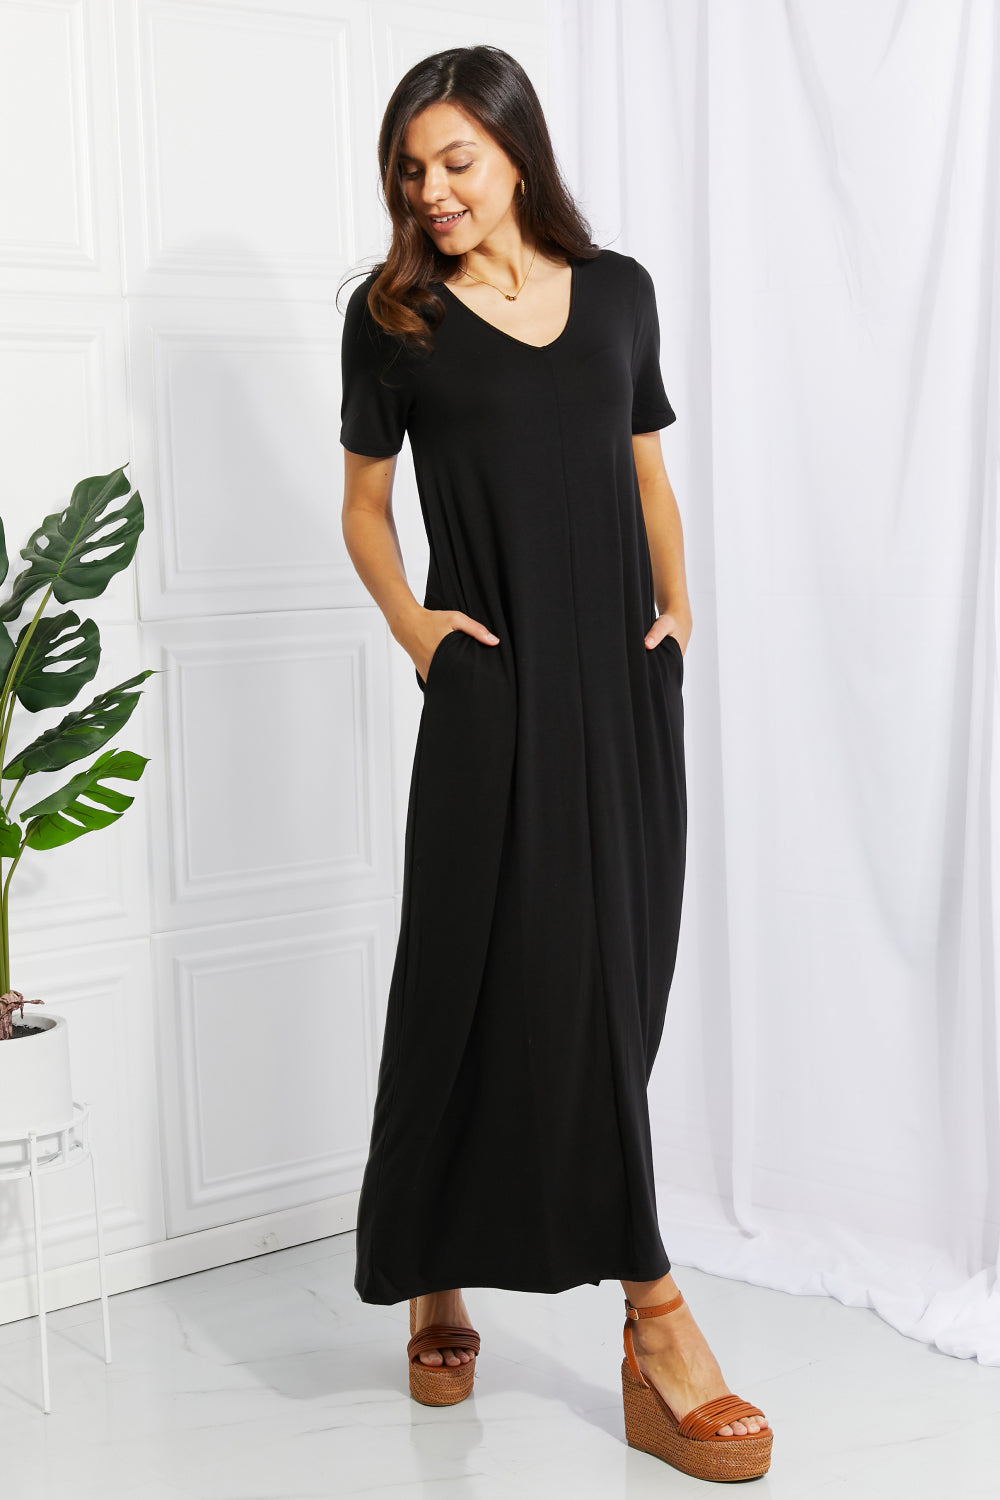 Zenana Simple Wonder Pocket Maxi Dress in Black